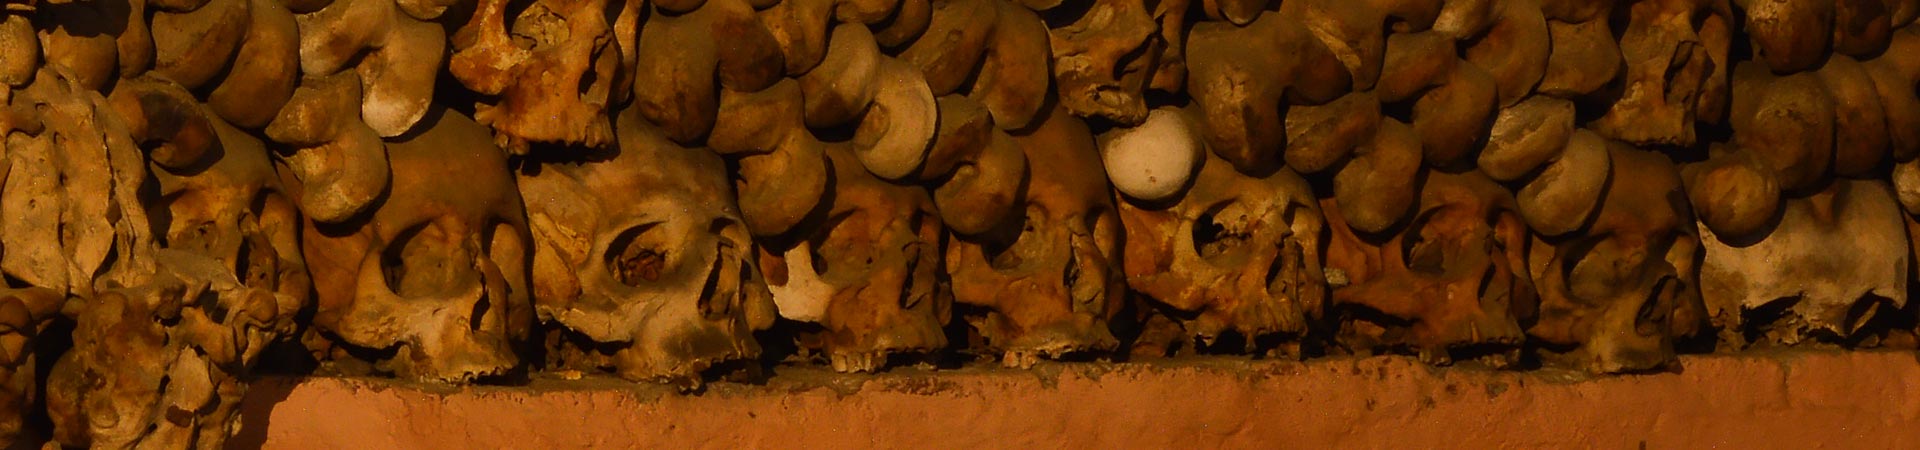 capuchin crypts bone chapels image 001